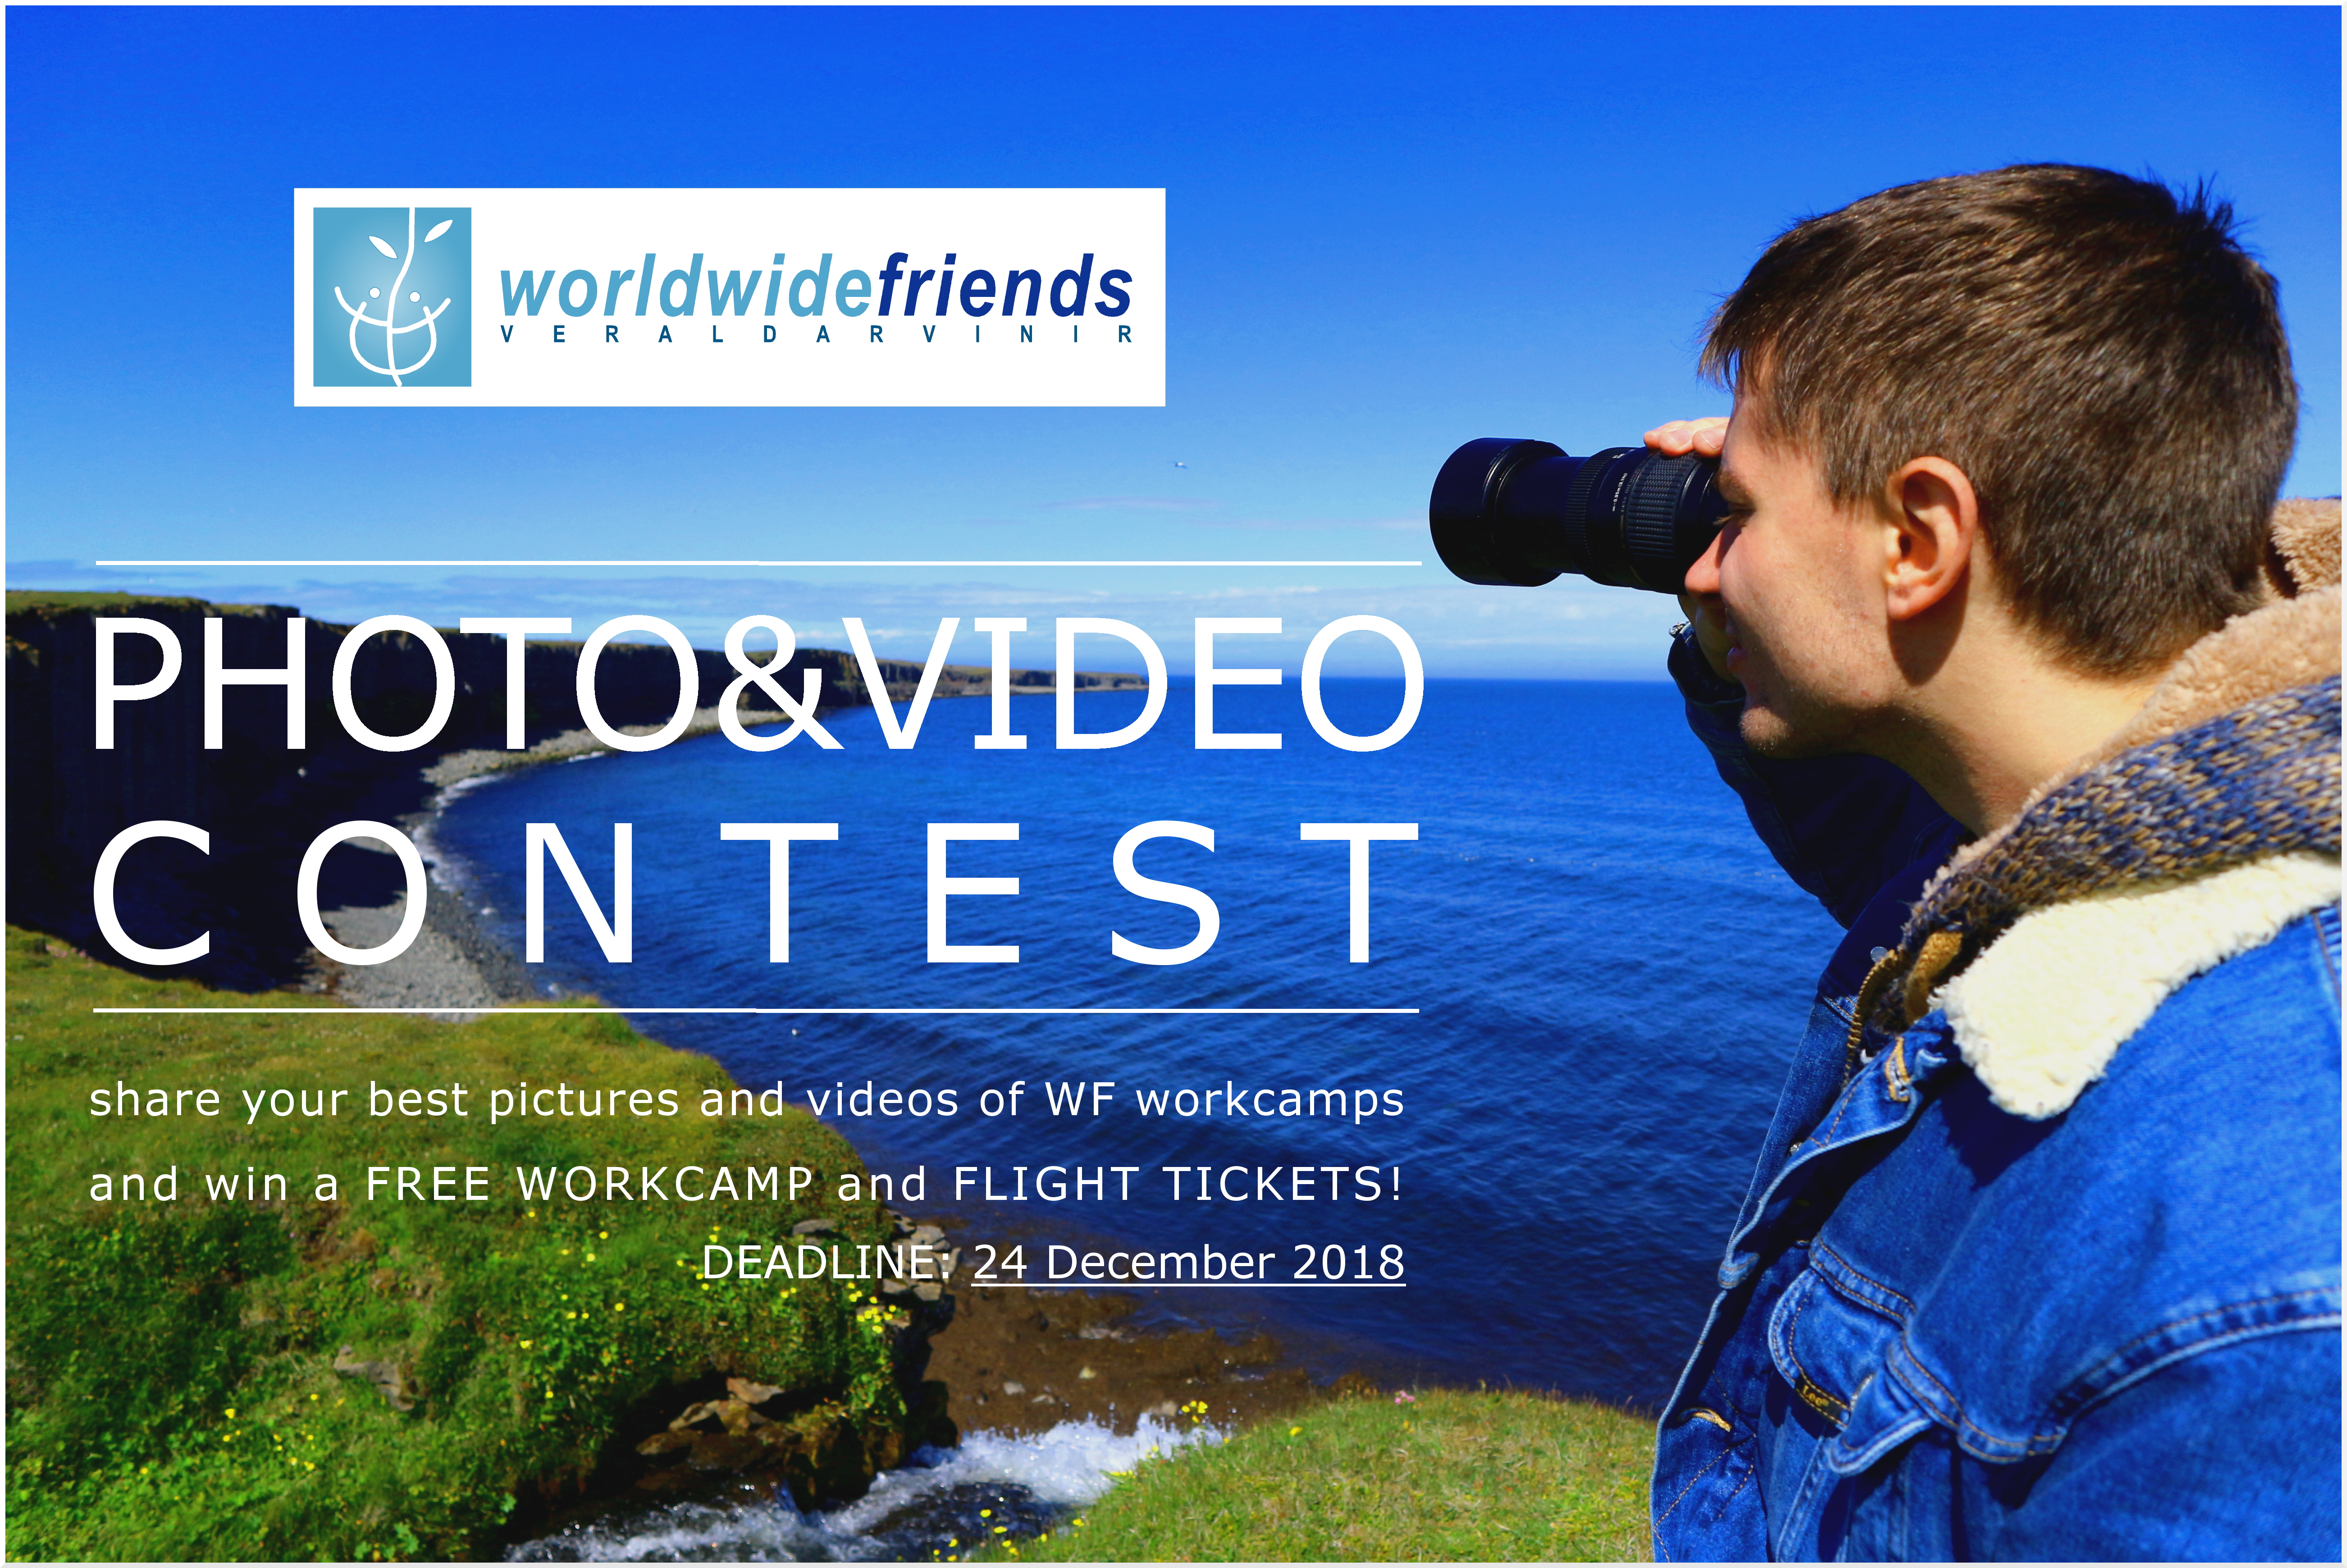 Worldwide Friends Photo&Video Contest